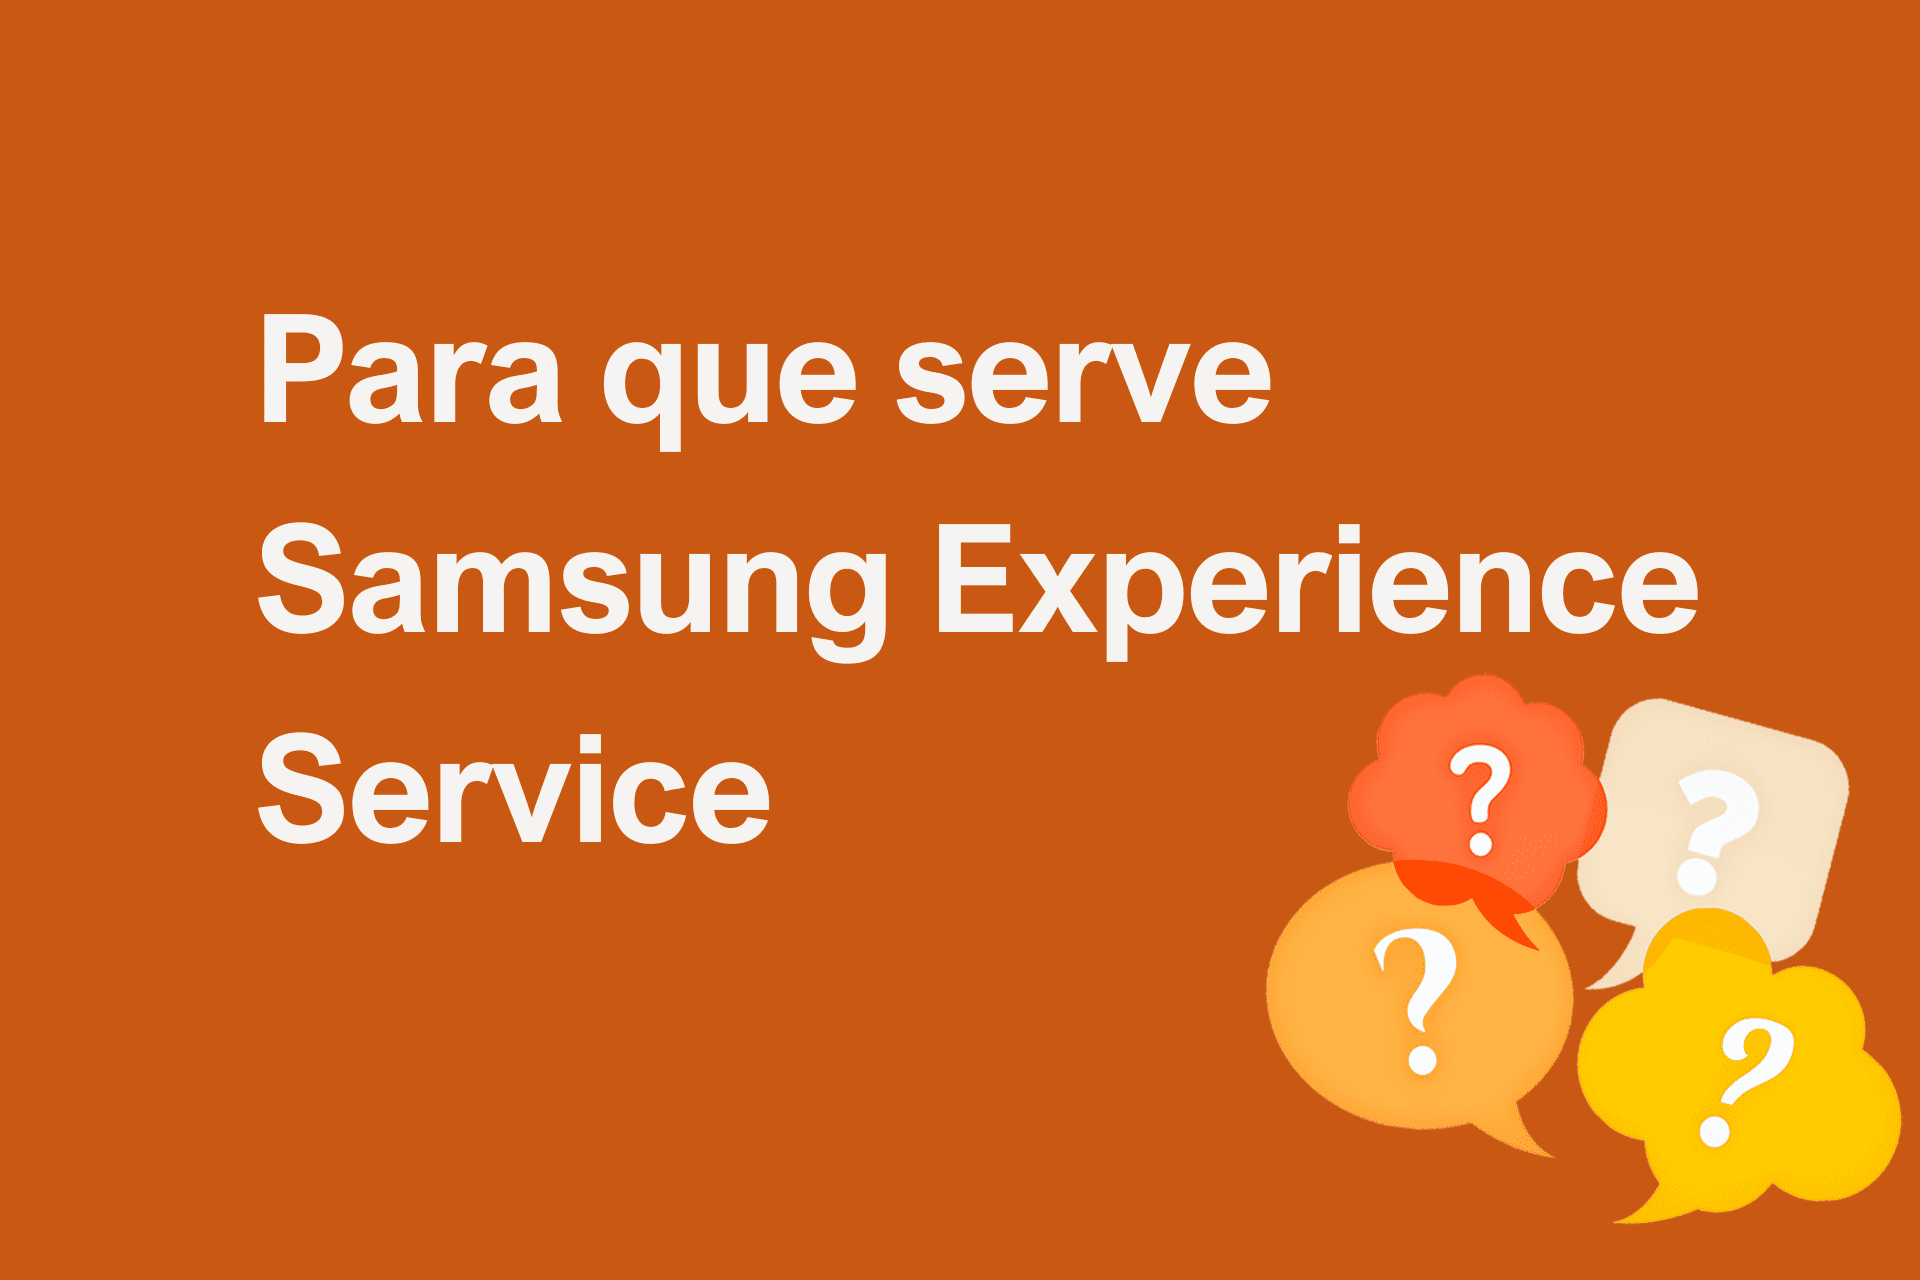 Para que serve Samsung Experience Service?